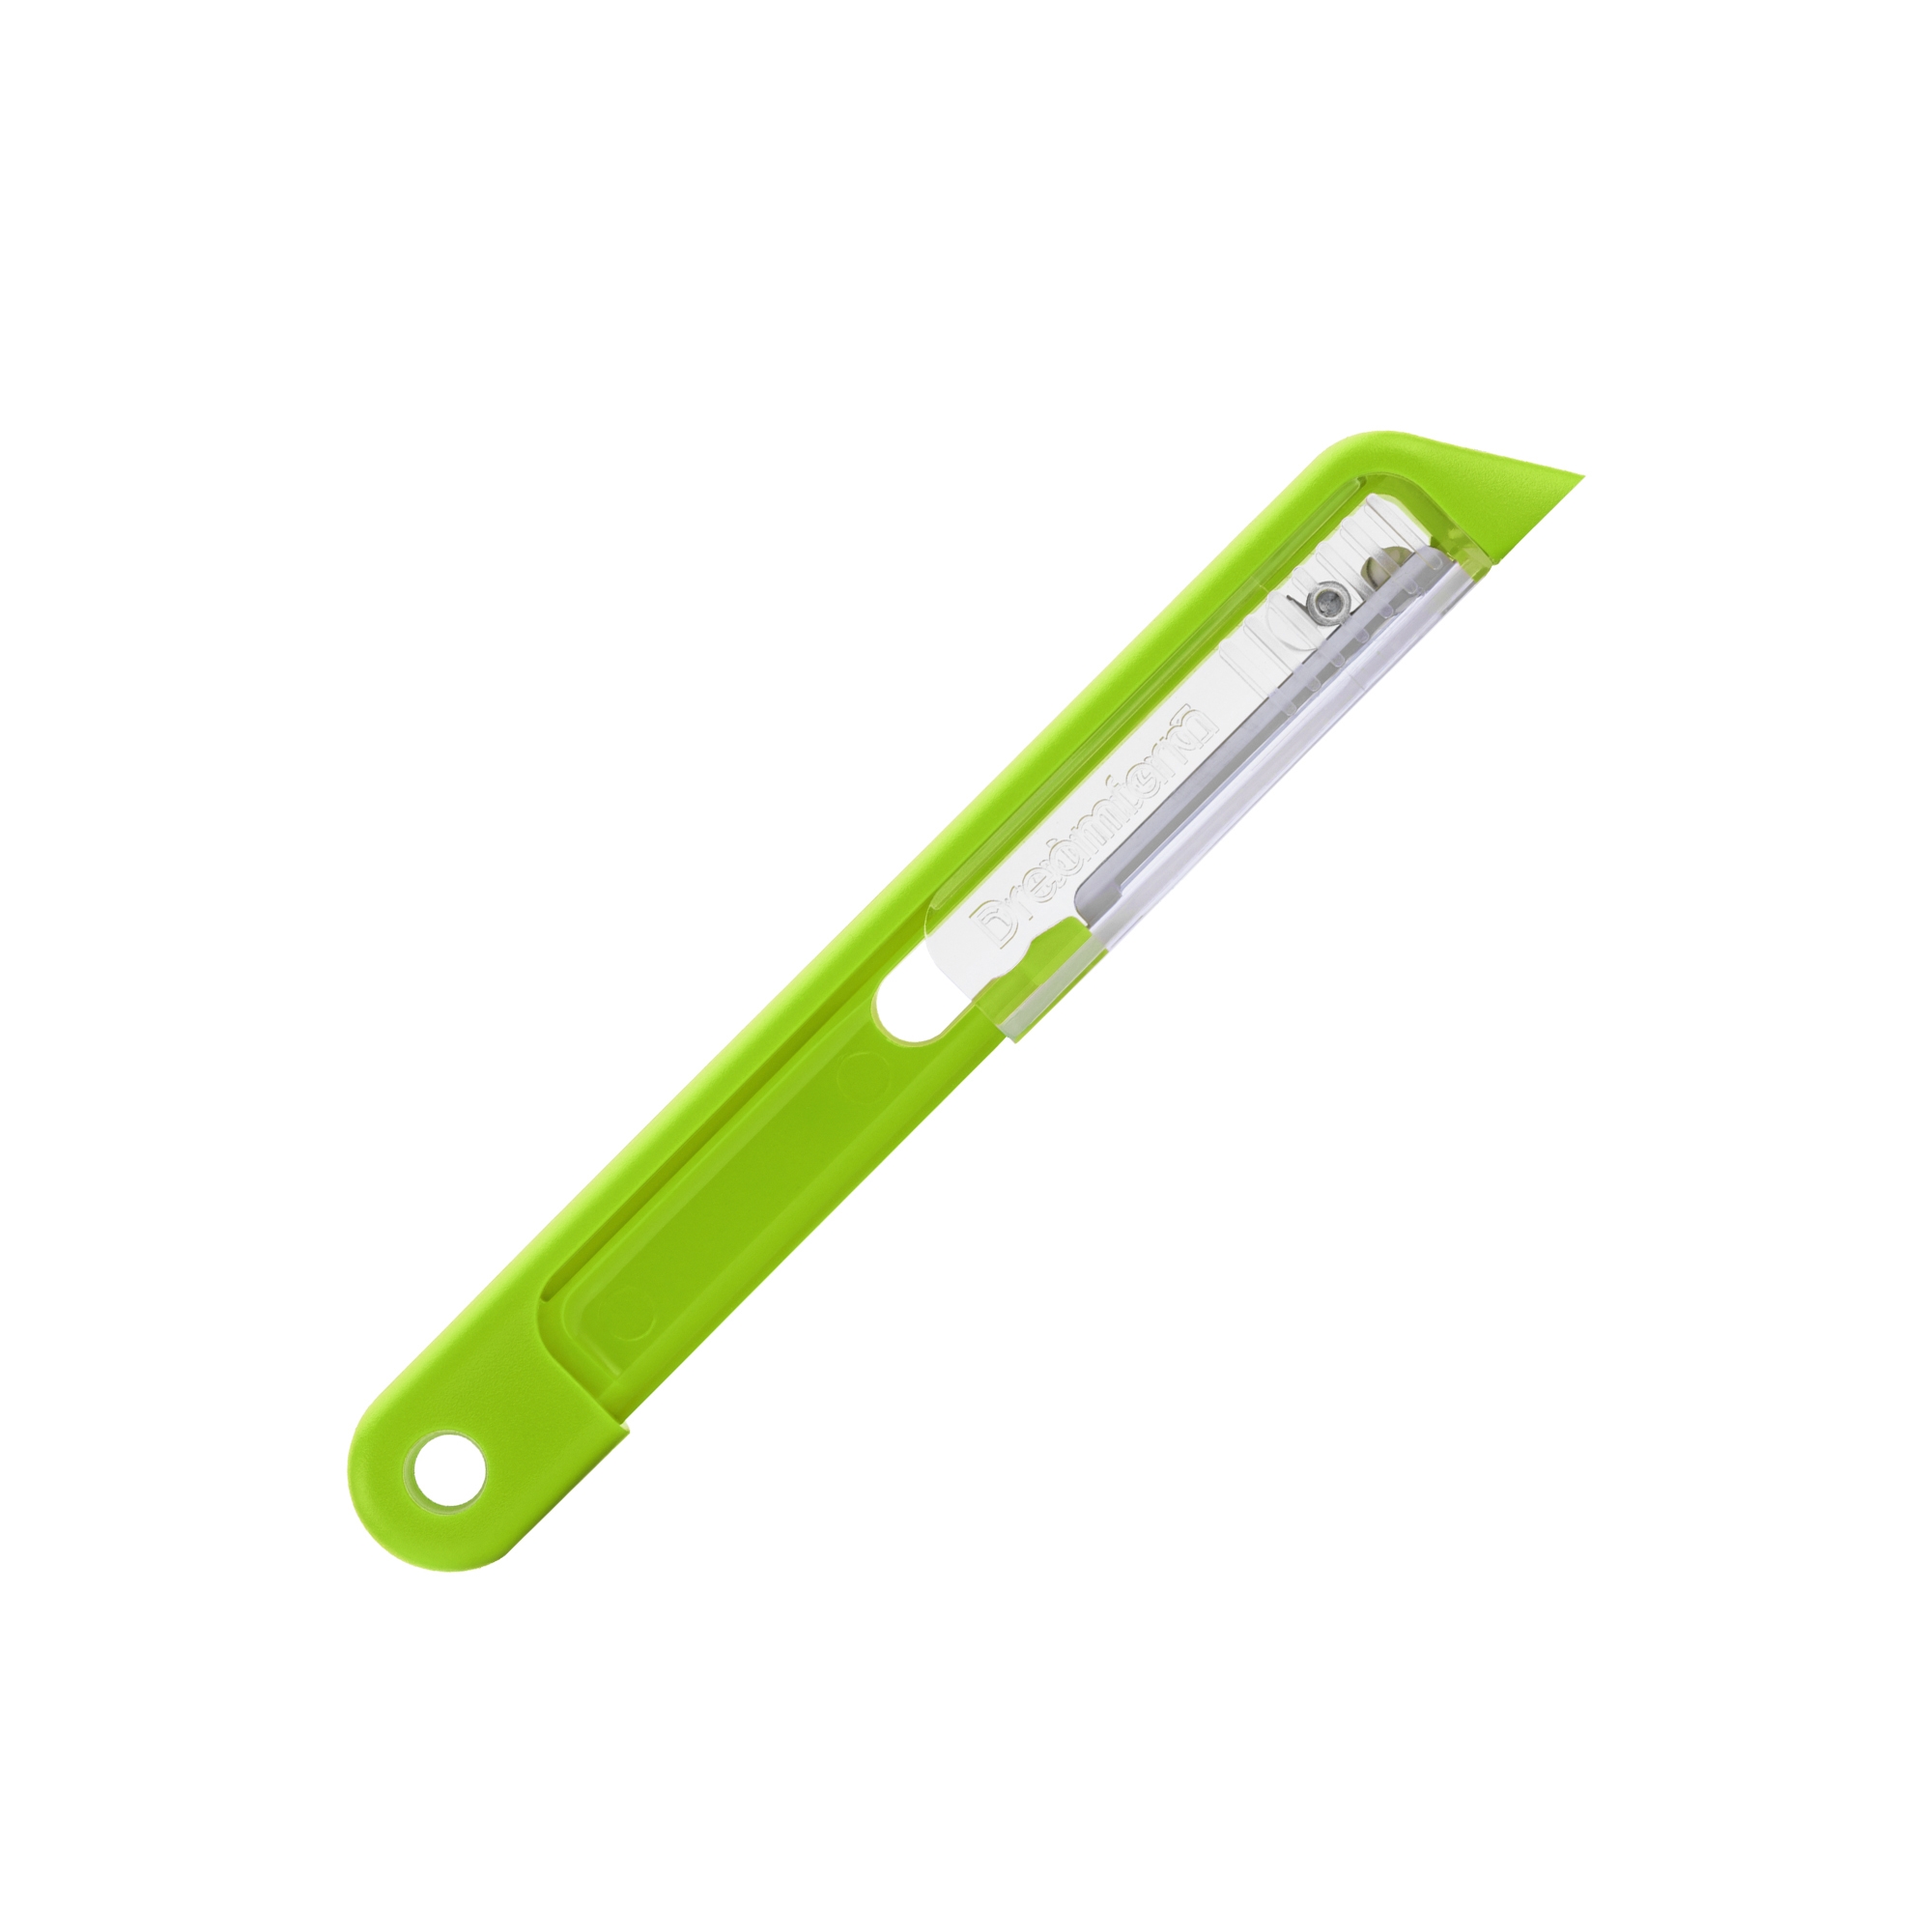 Dreamfarm Sharple Sharp Safety Peeler Green Image 1